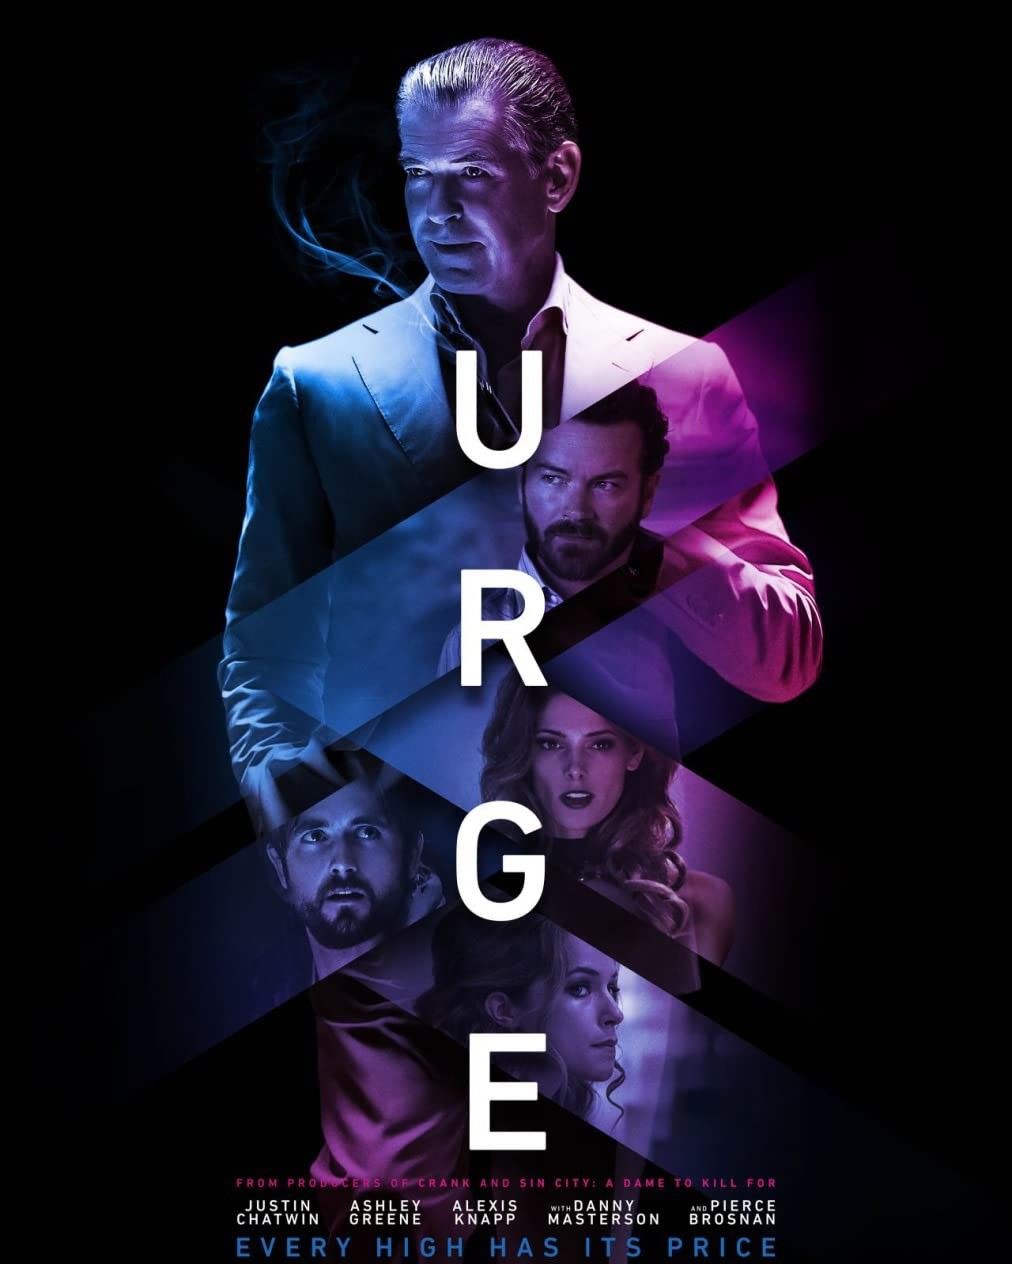 Urge (2016) Hindi Dubbed BluRay download full movie